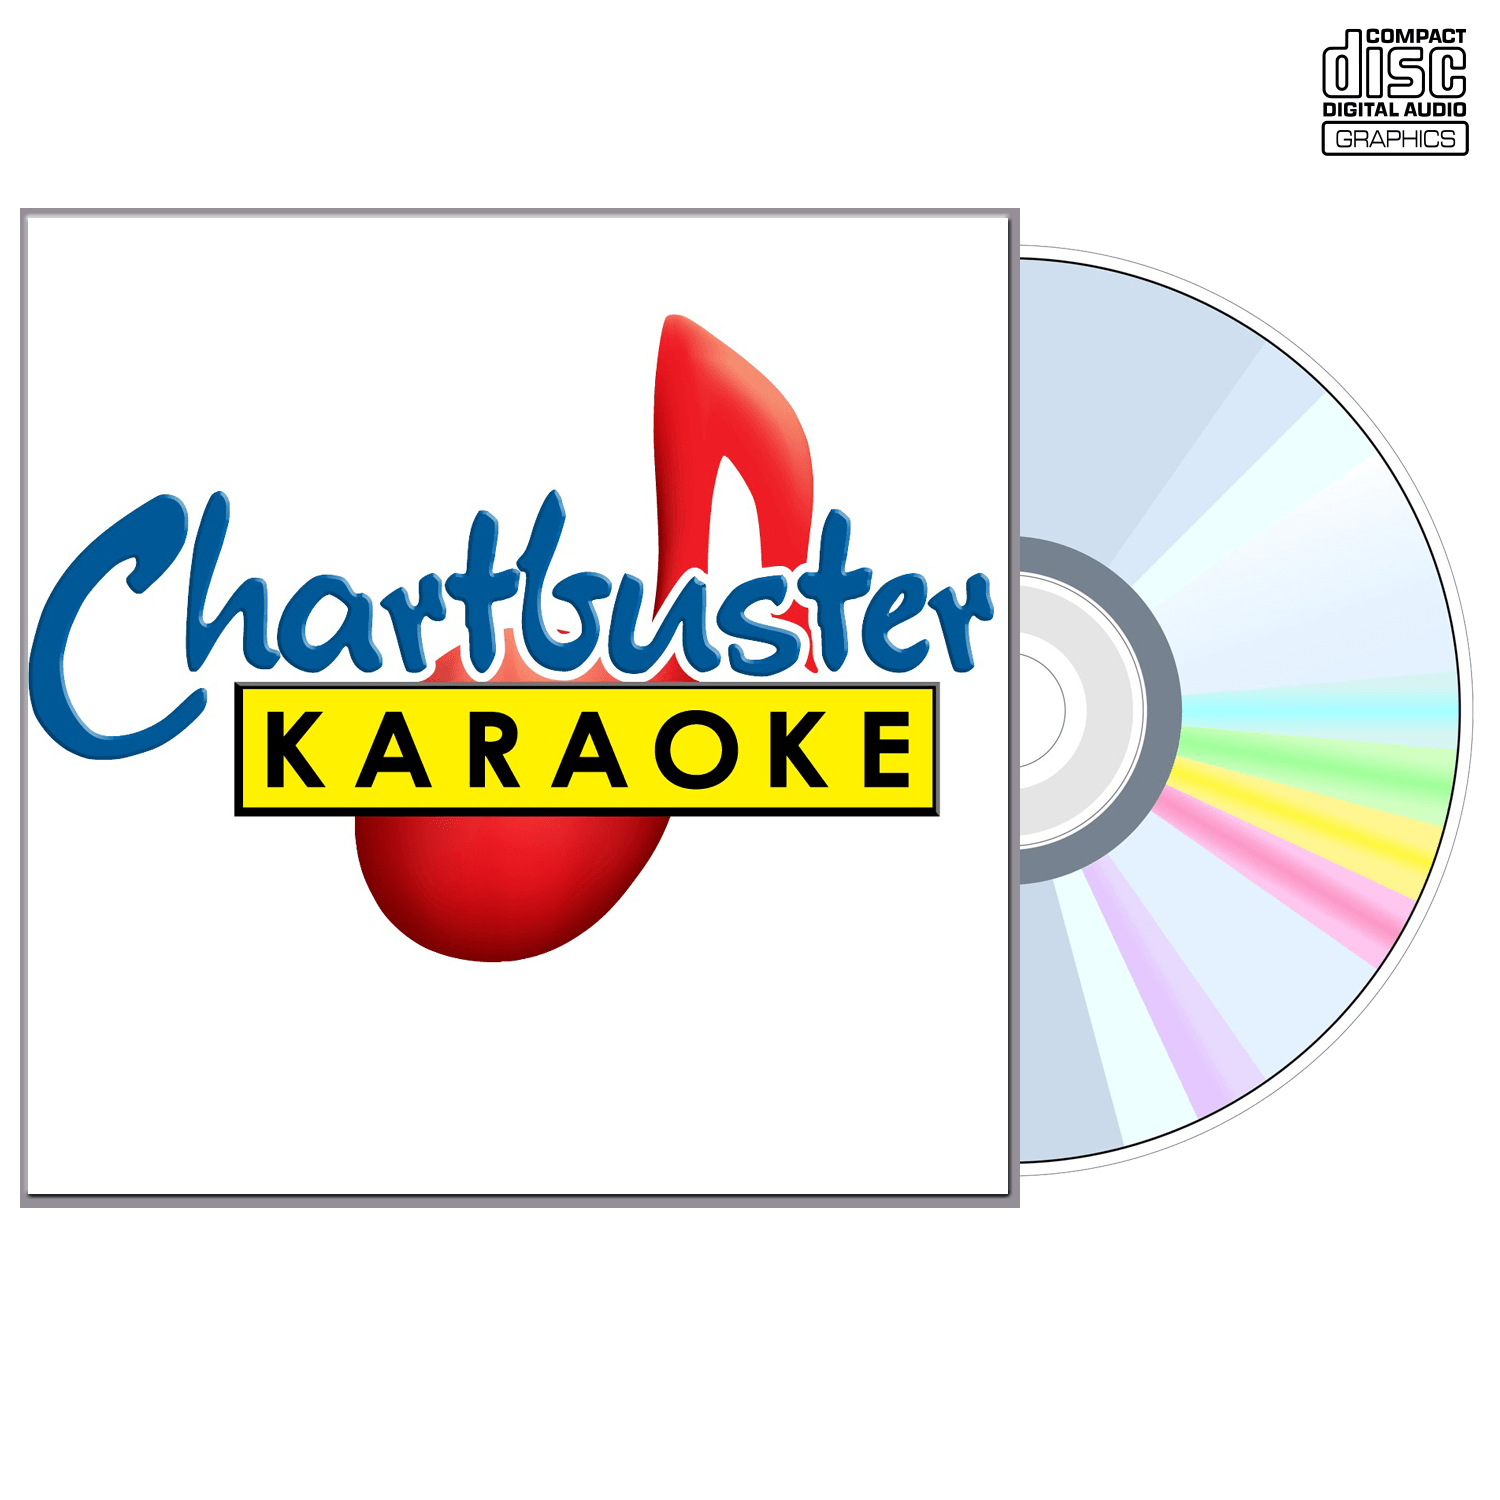 Ultimate 90's Collection V04 - CD+G - Chartbuster Karaoke - Karaoke Home Entertainment